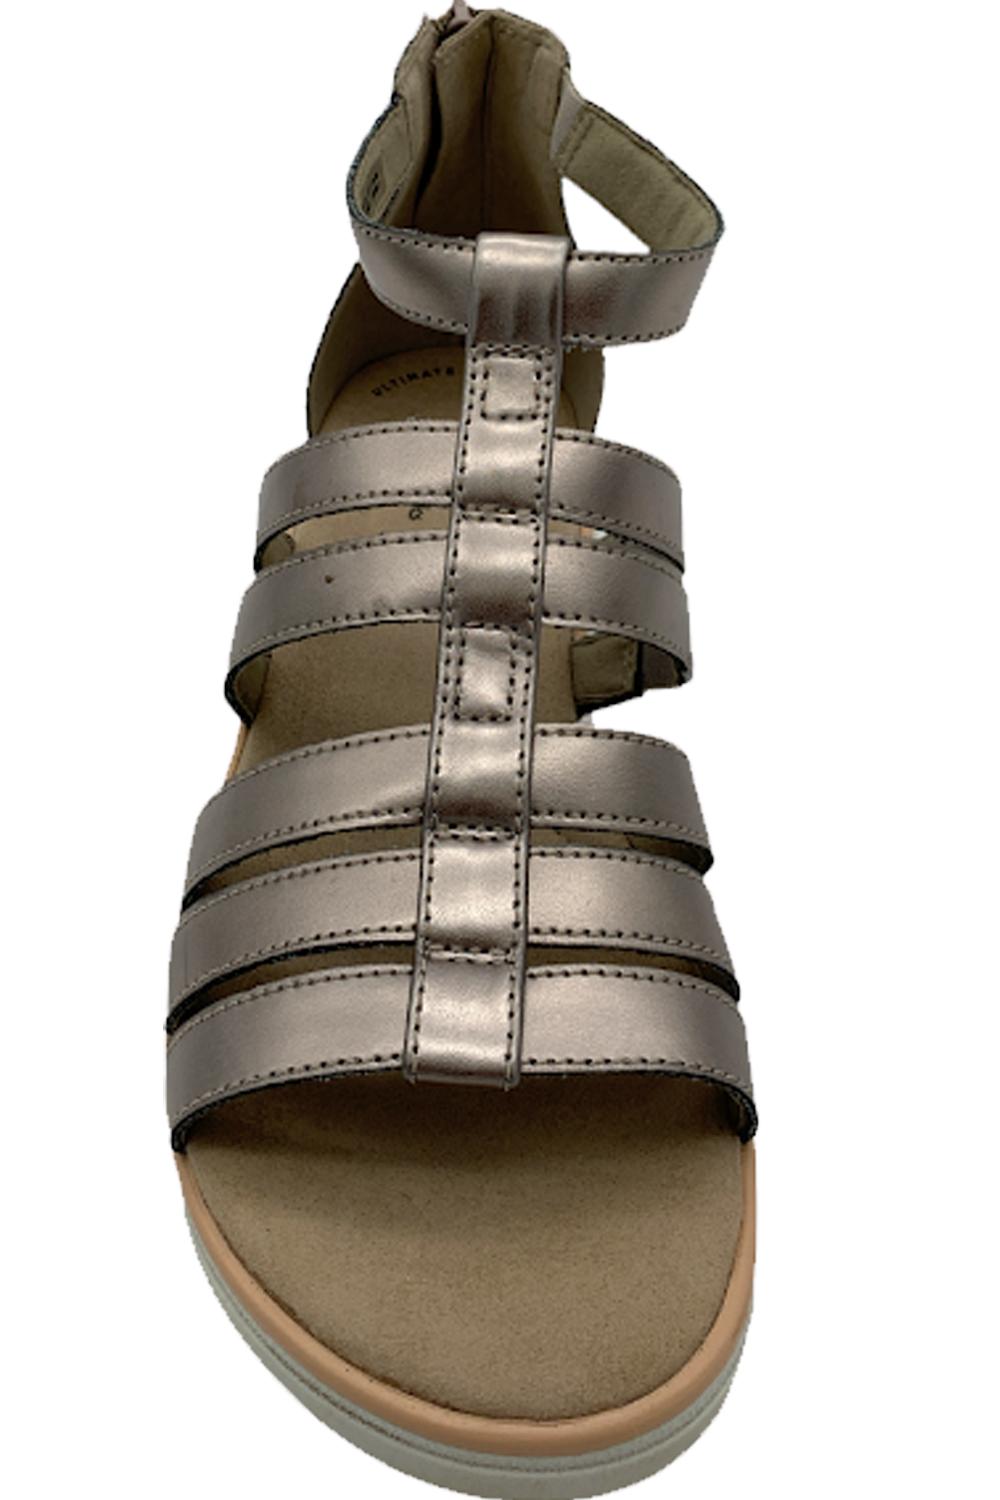 Clarks Collection Gladiator Wedge Sandals Jillian Pewter Metallic | Jender